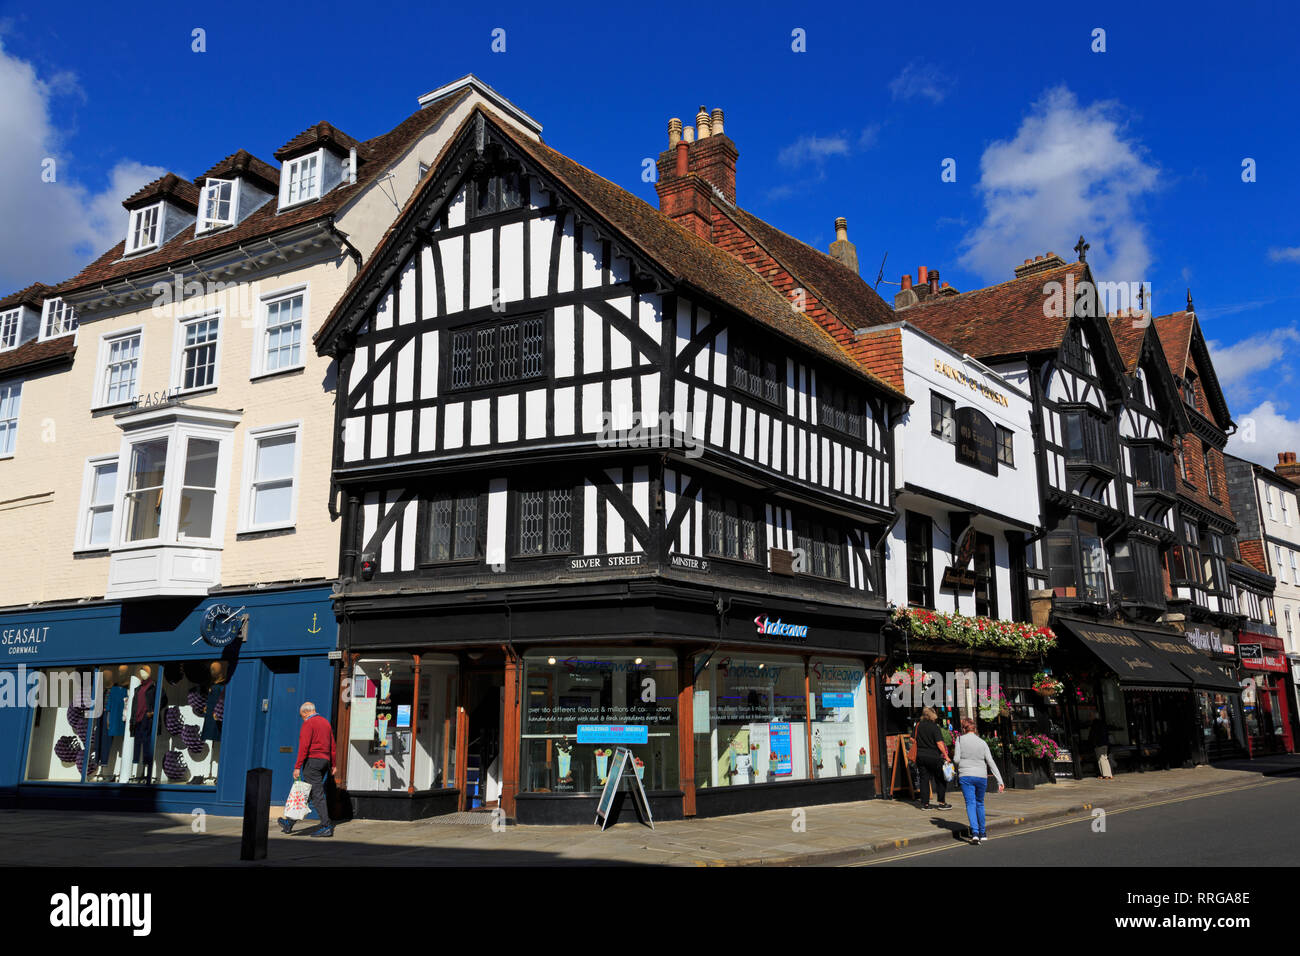 Minster Street, Salisbury, Wiltshire, England, United Kingdom, Europe Stock Photo